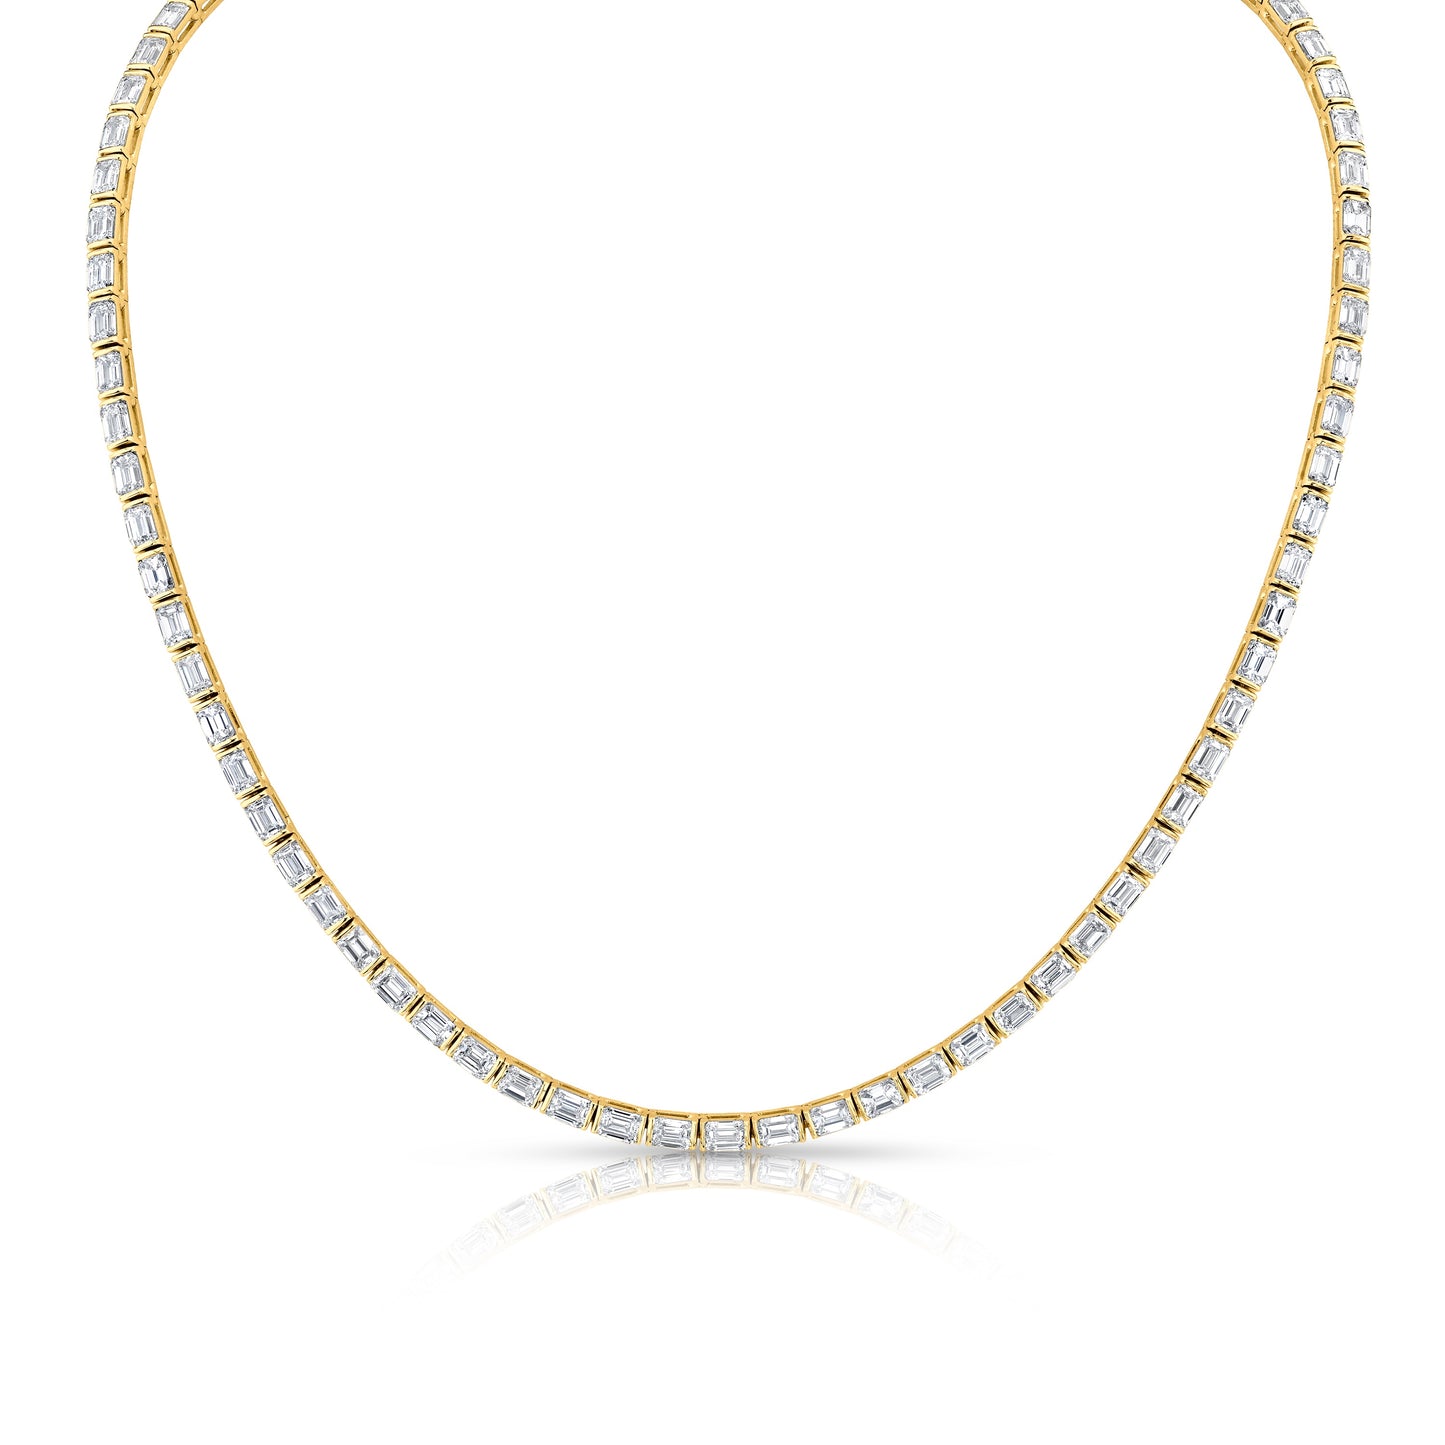 East-West Emerald Cut Diamond Bezel-Set Necklace